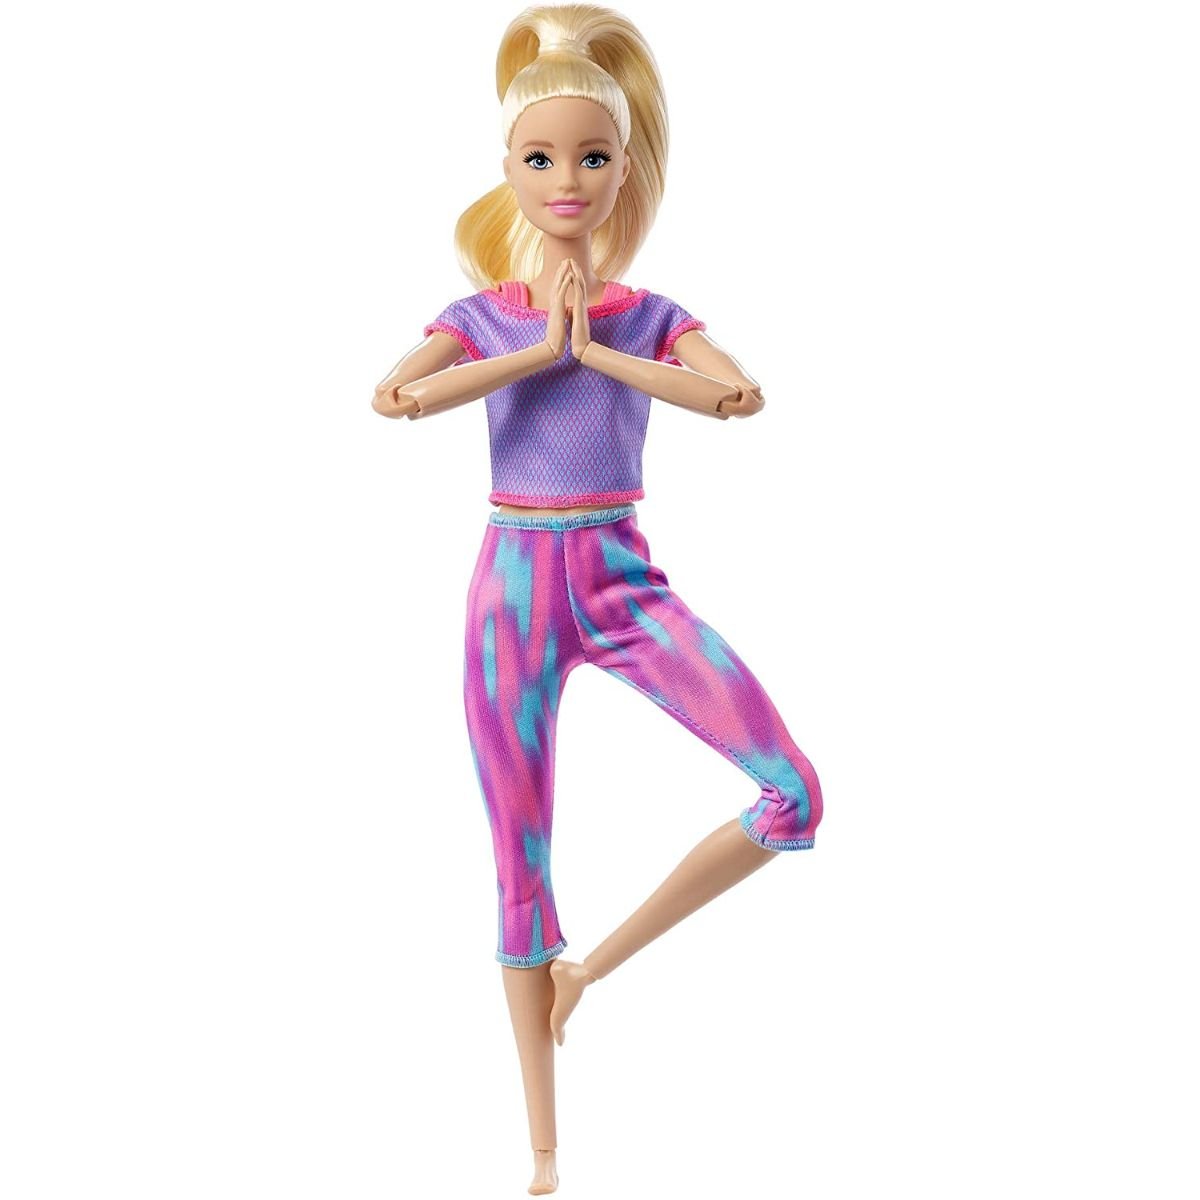 Papusa Barbie, Made to move, GXF04 Barbie imagine 2022 protejamcopilaria.ro